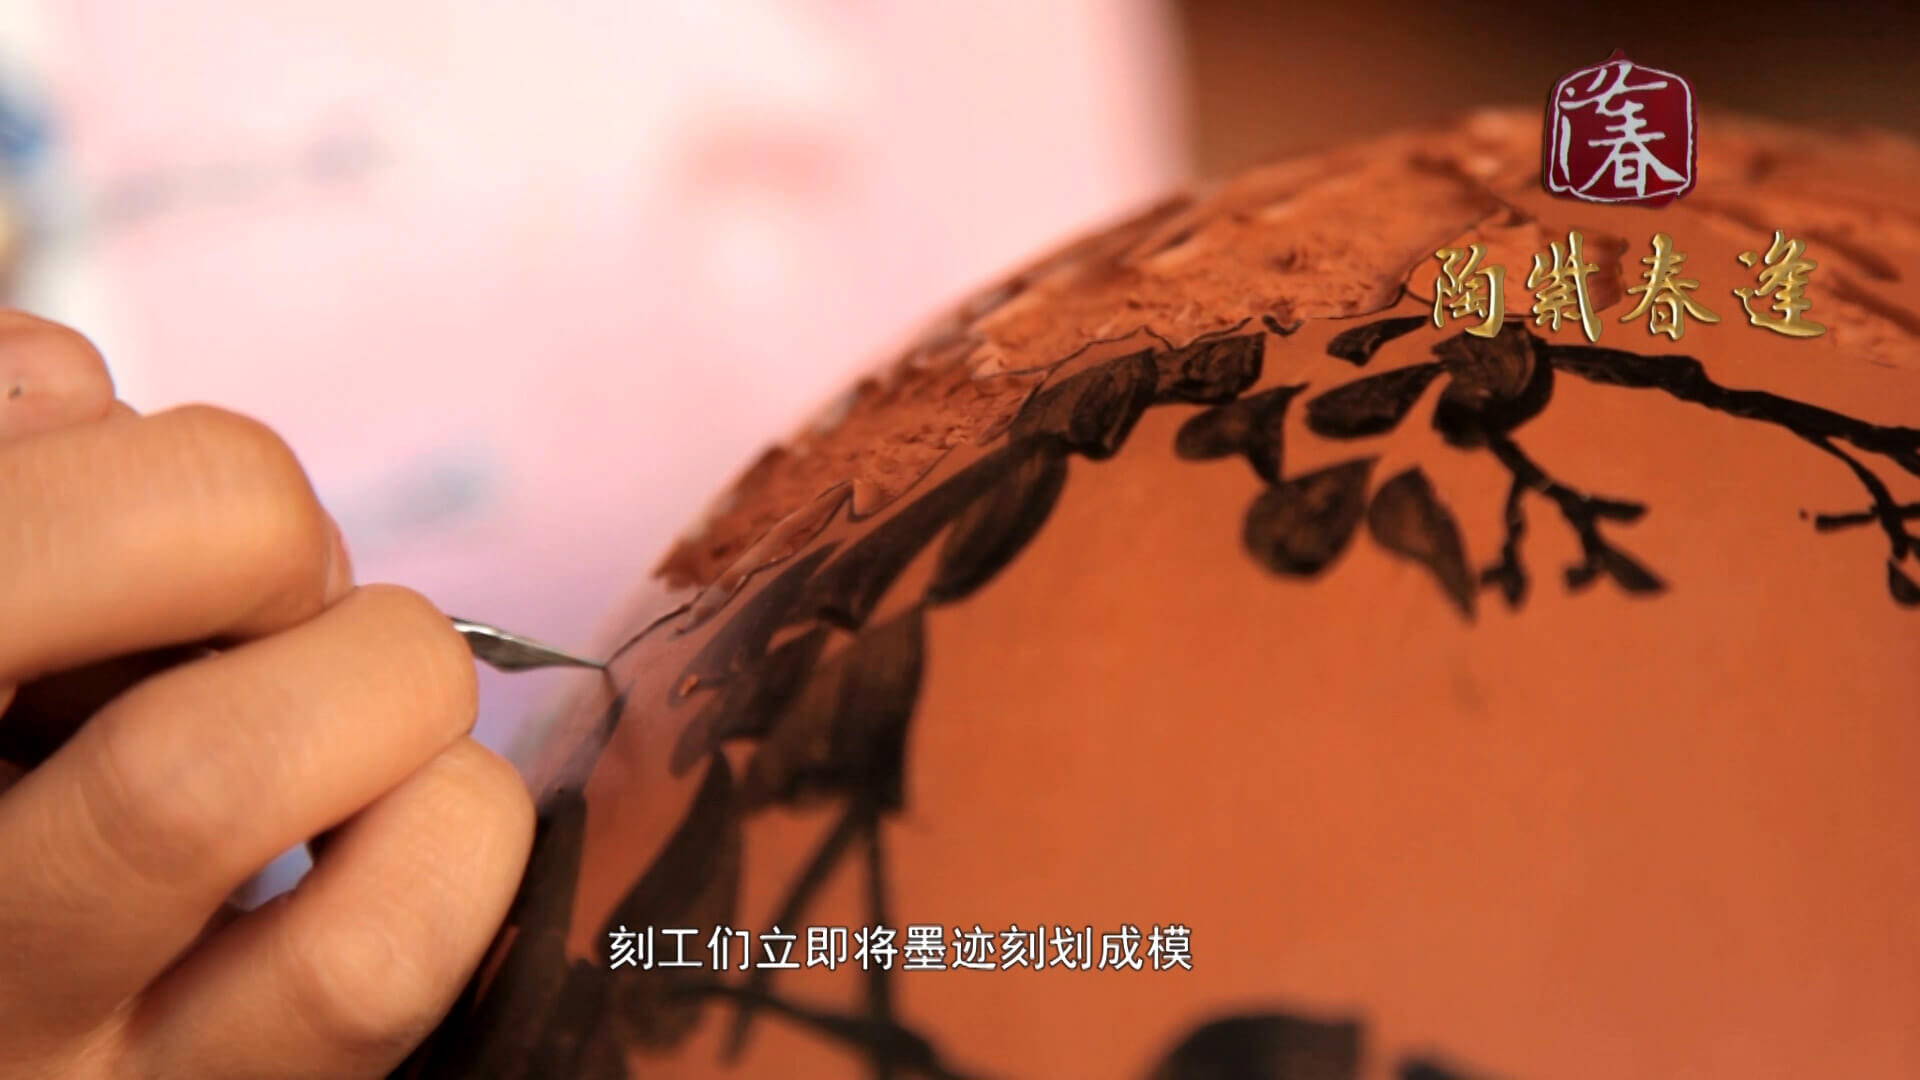 Creating Jian Shui Pottery - Carve Design